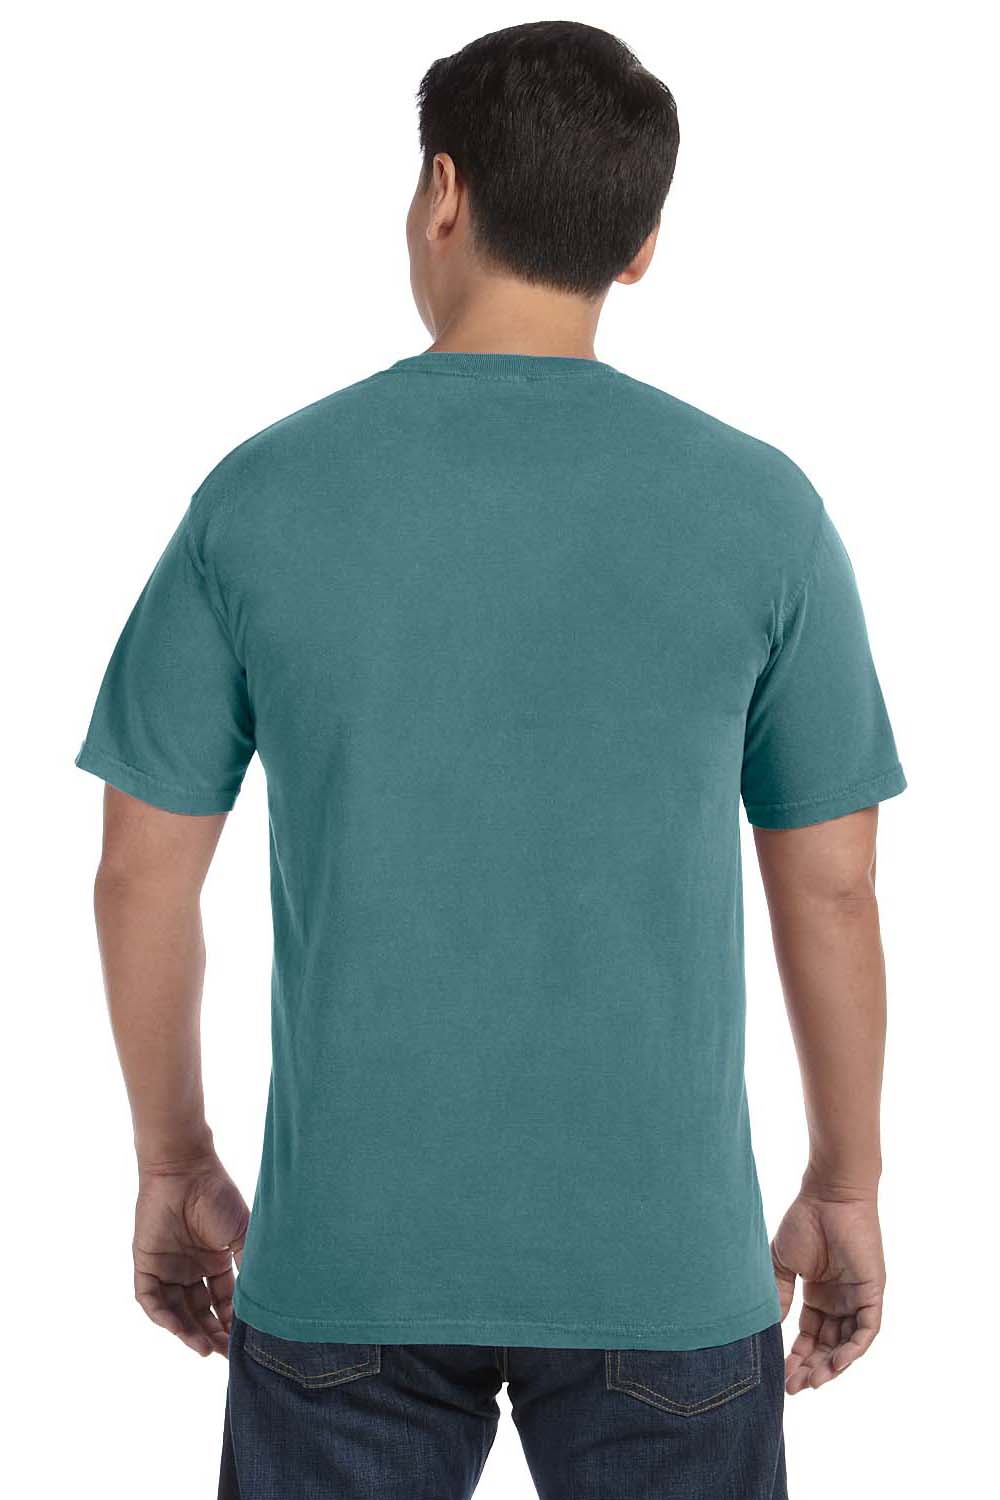 Comfort Colors C1717 Mens Short Sleeve Crewneck T-Shirt Blue Spruce Back